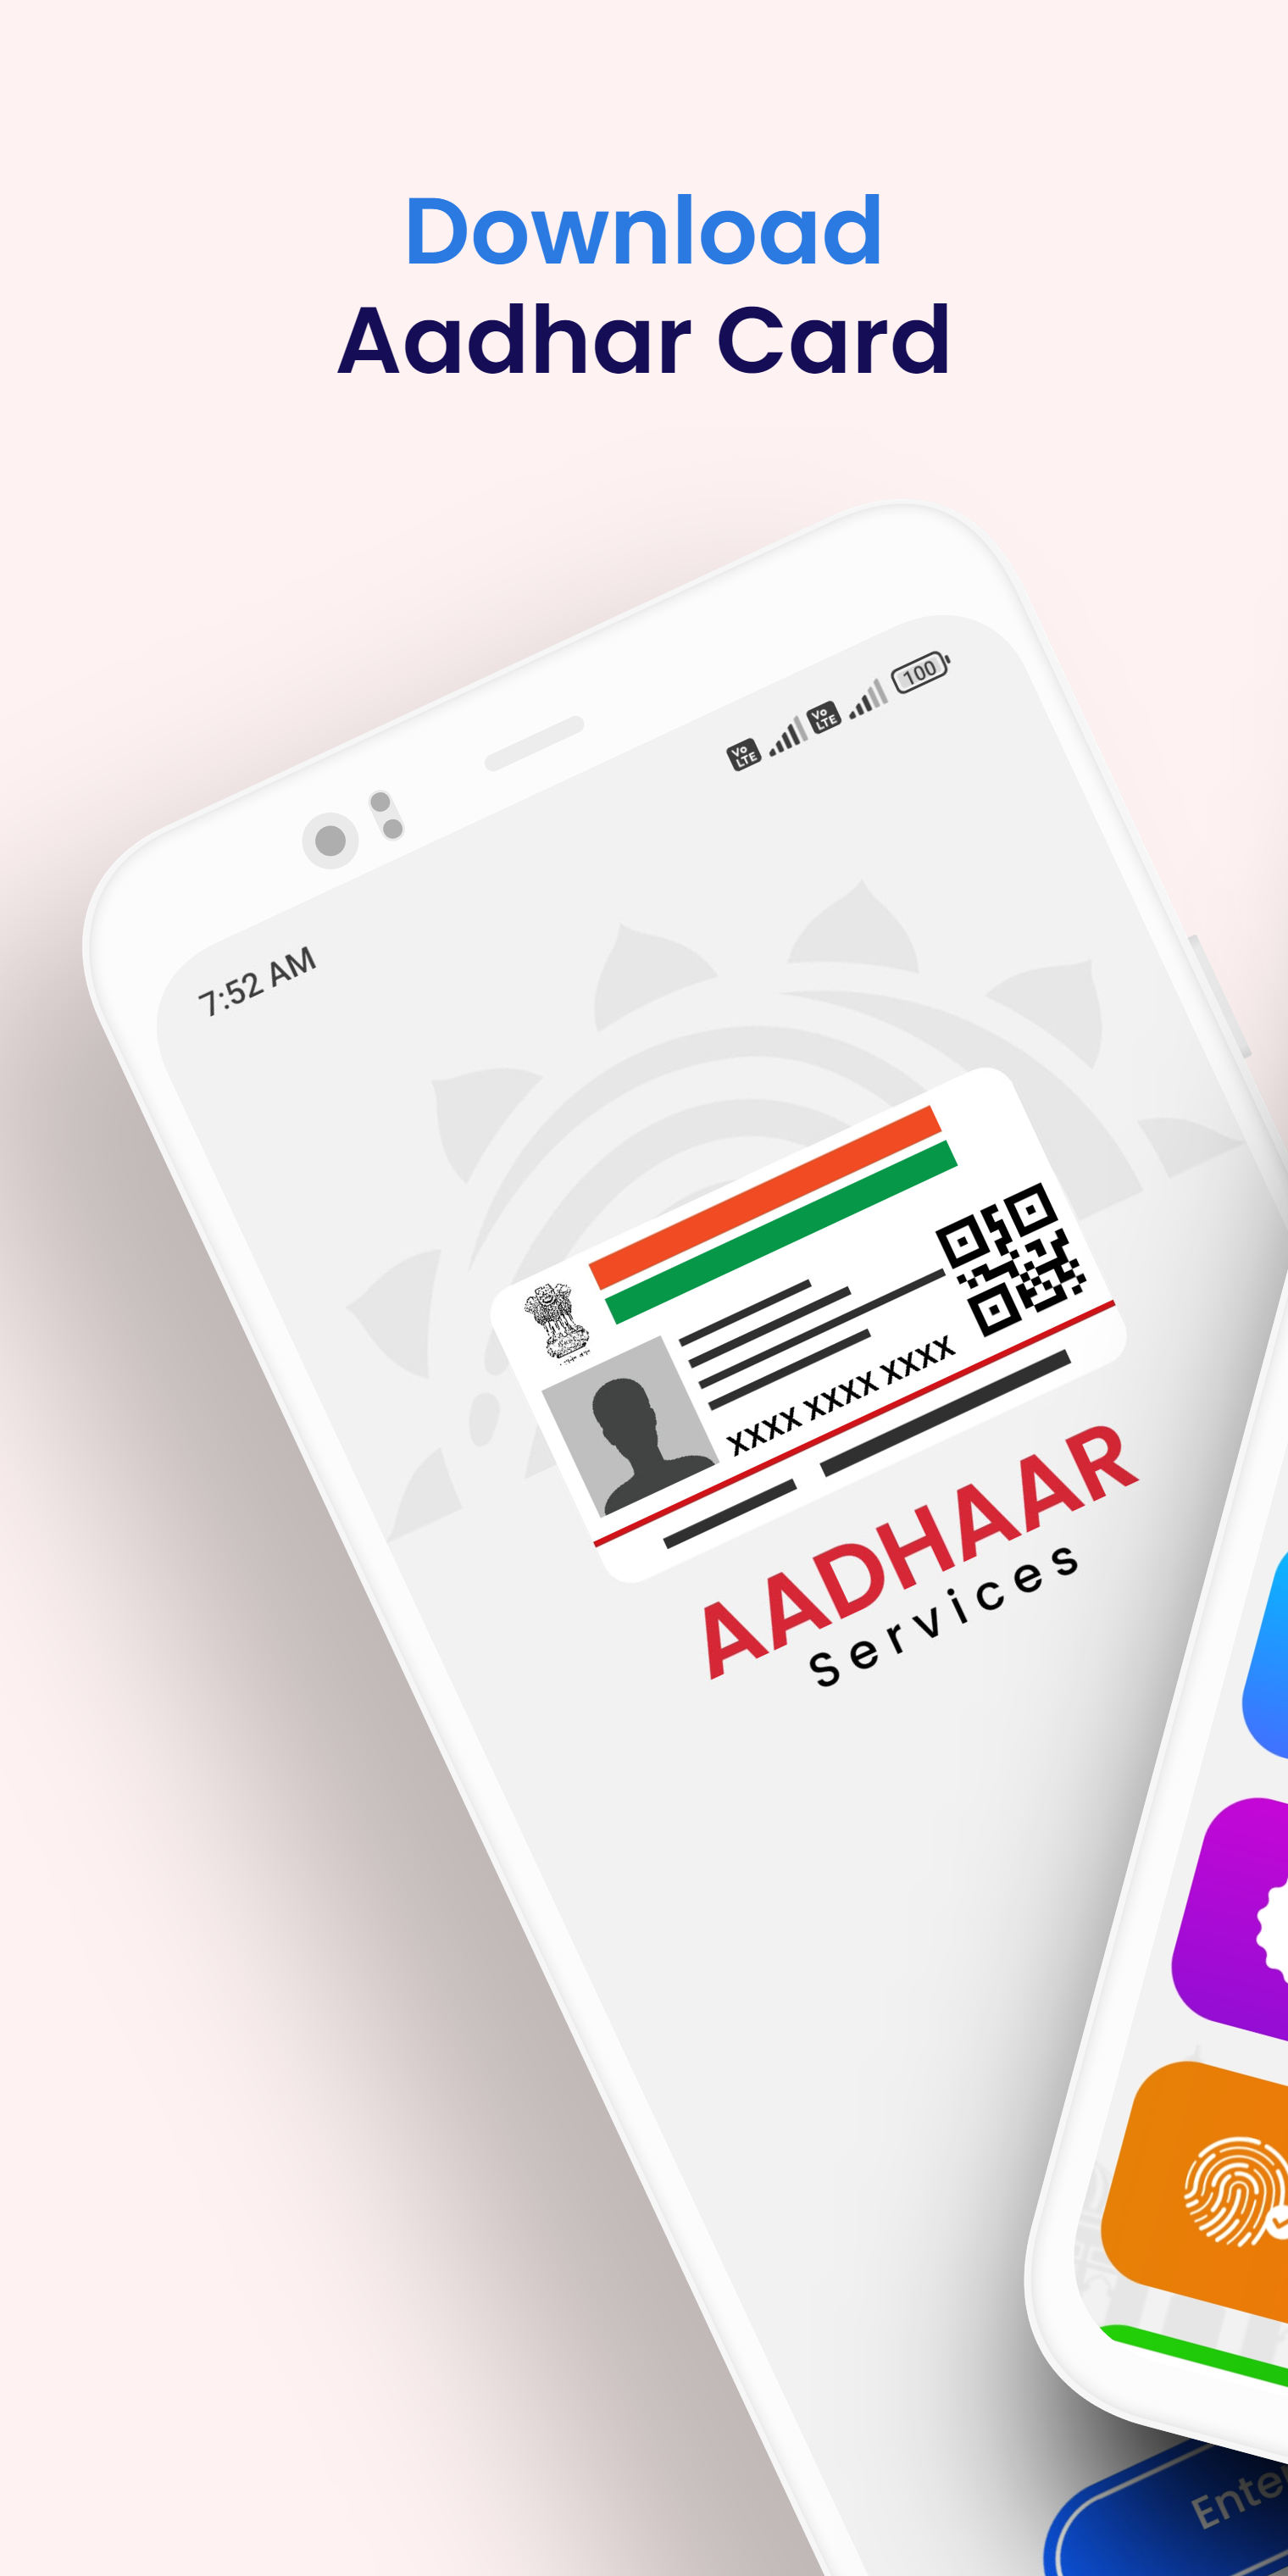 Aadhar Card-Status Check Guide